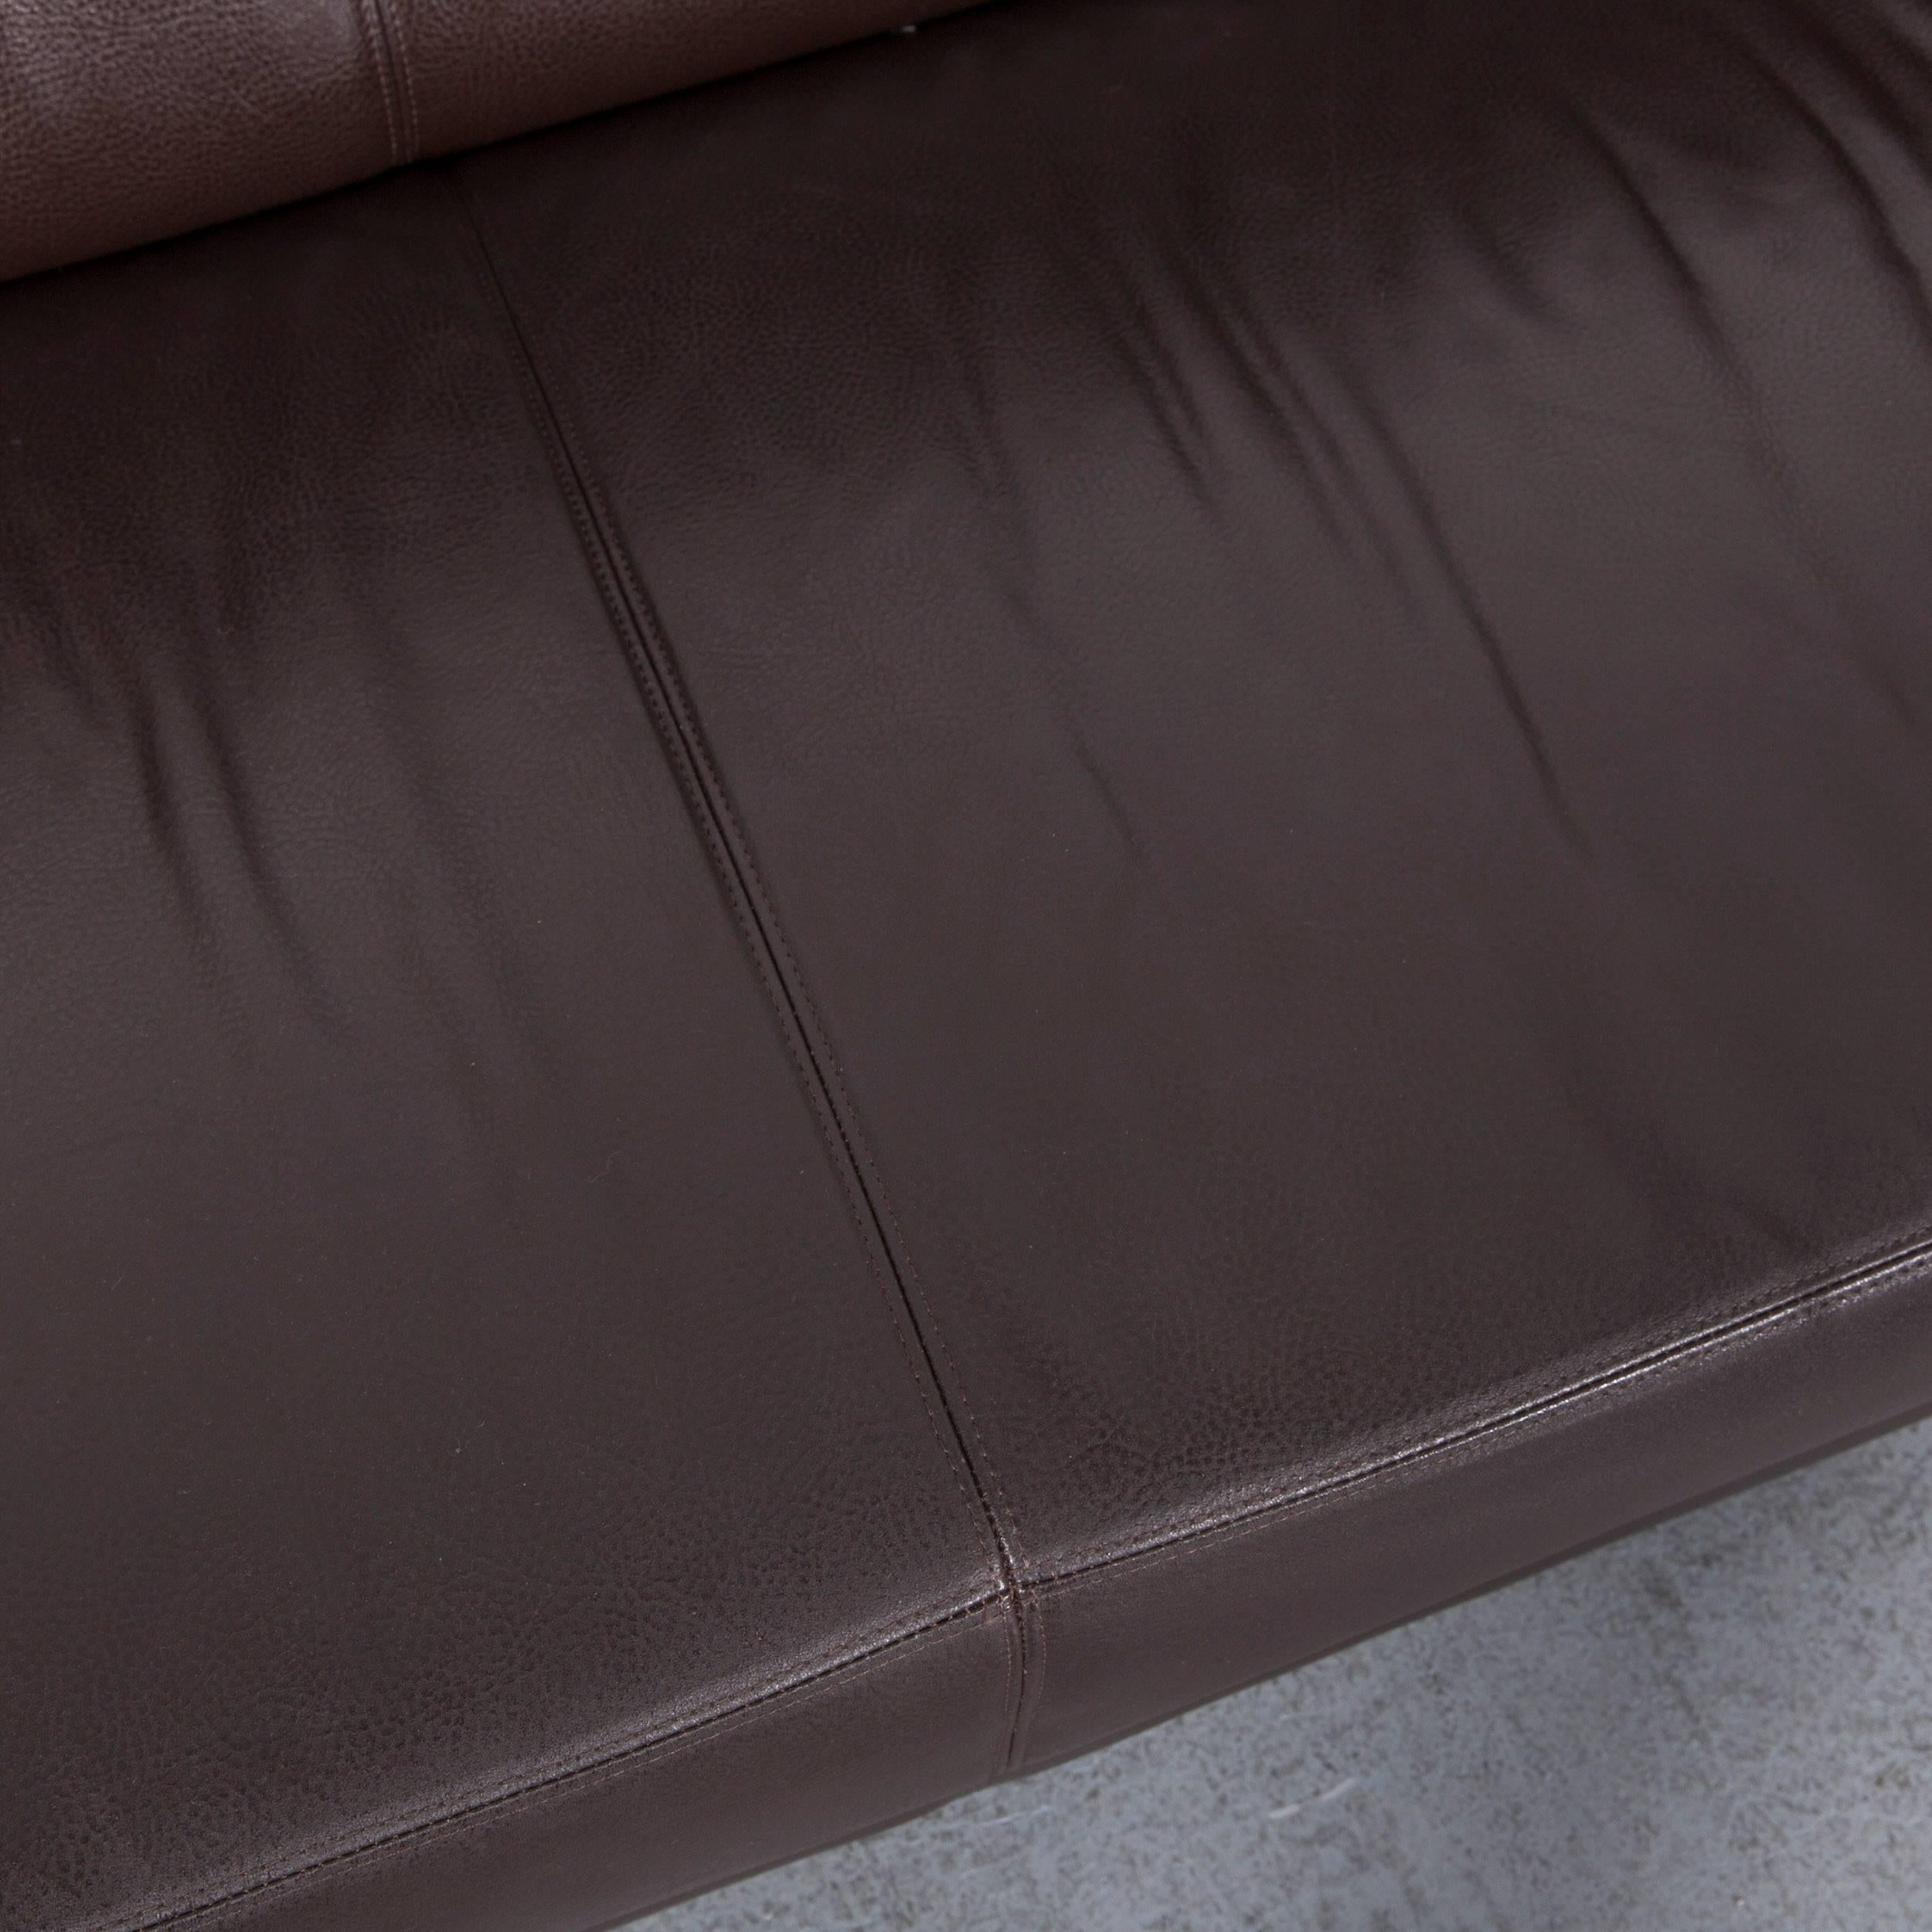 Machalke Sumatra Leather Sofa Set Brown Two-Seat and Armchair 2